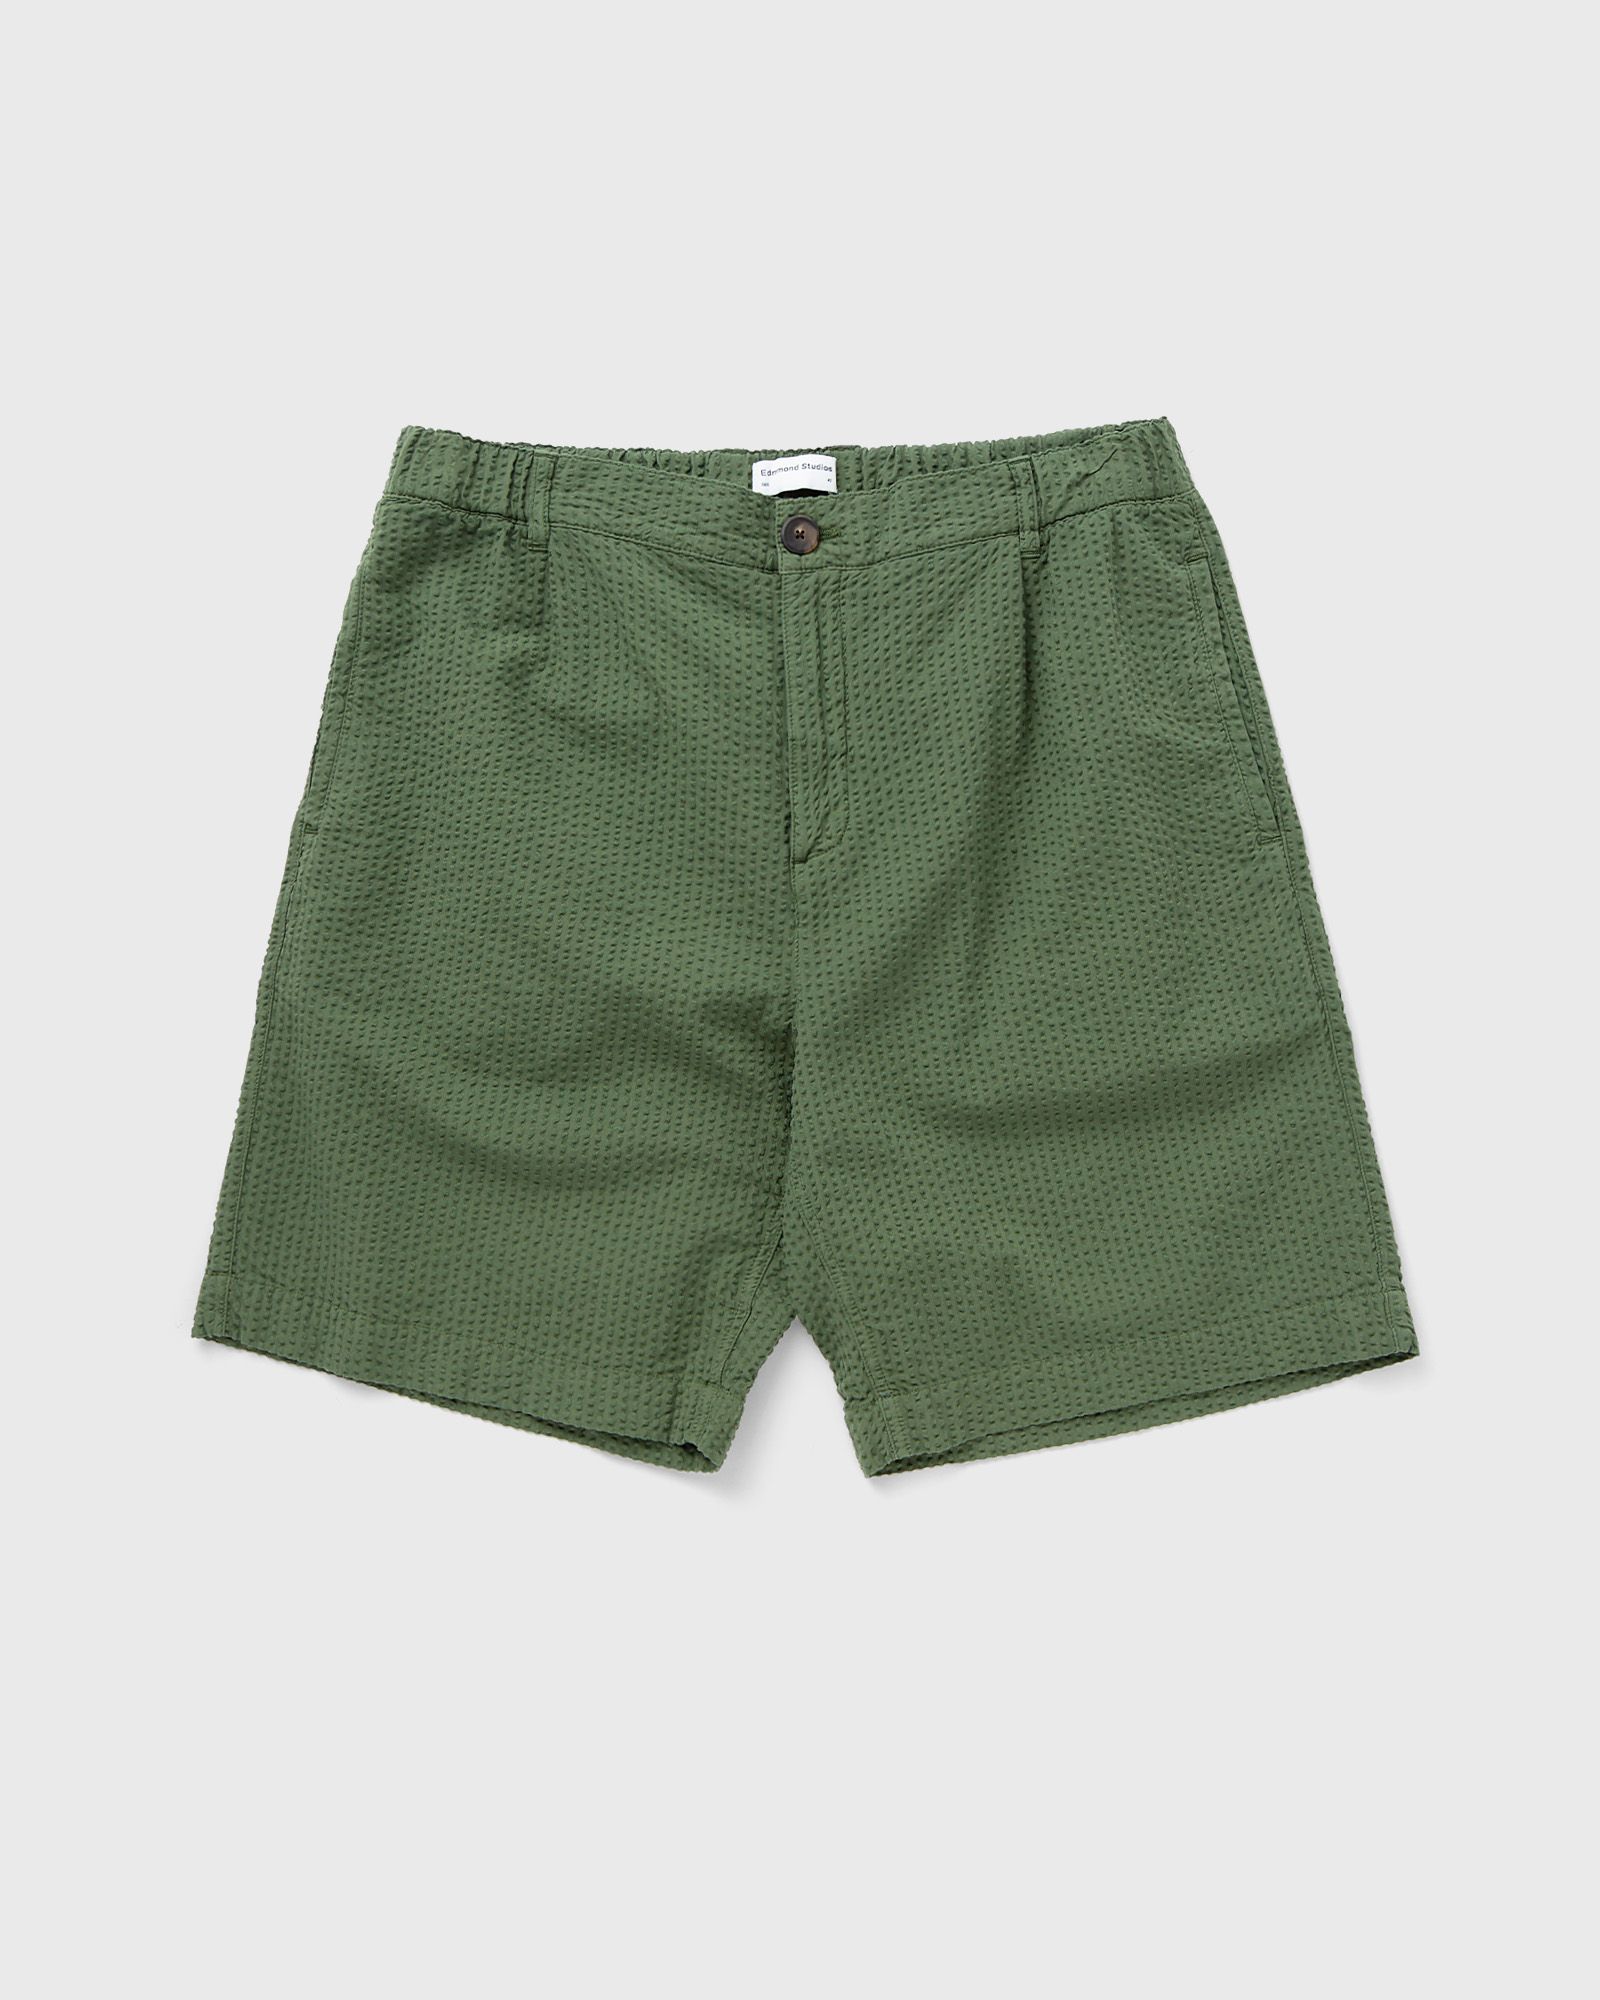 Edmmond Studios - travis short men casual shorts green in größe:s